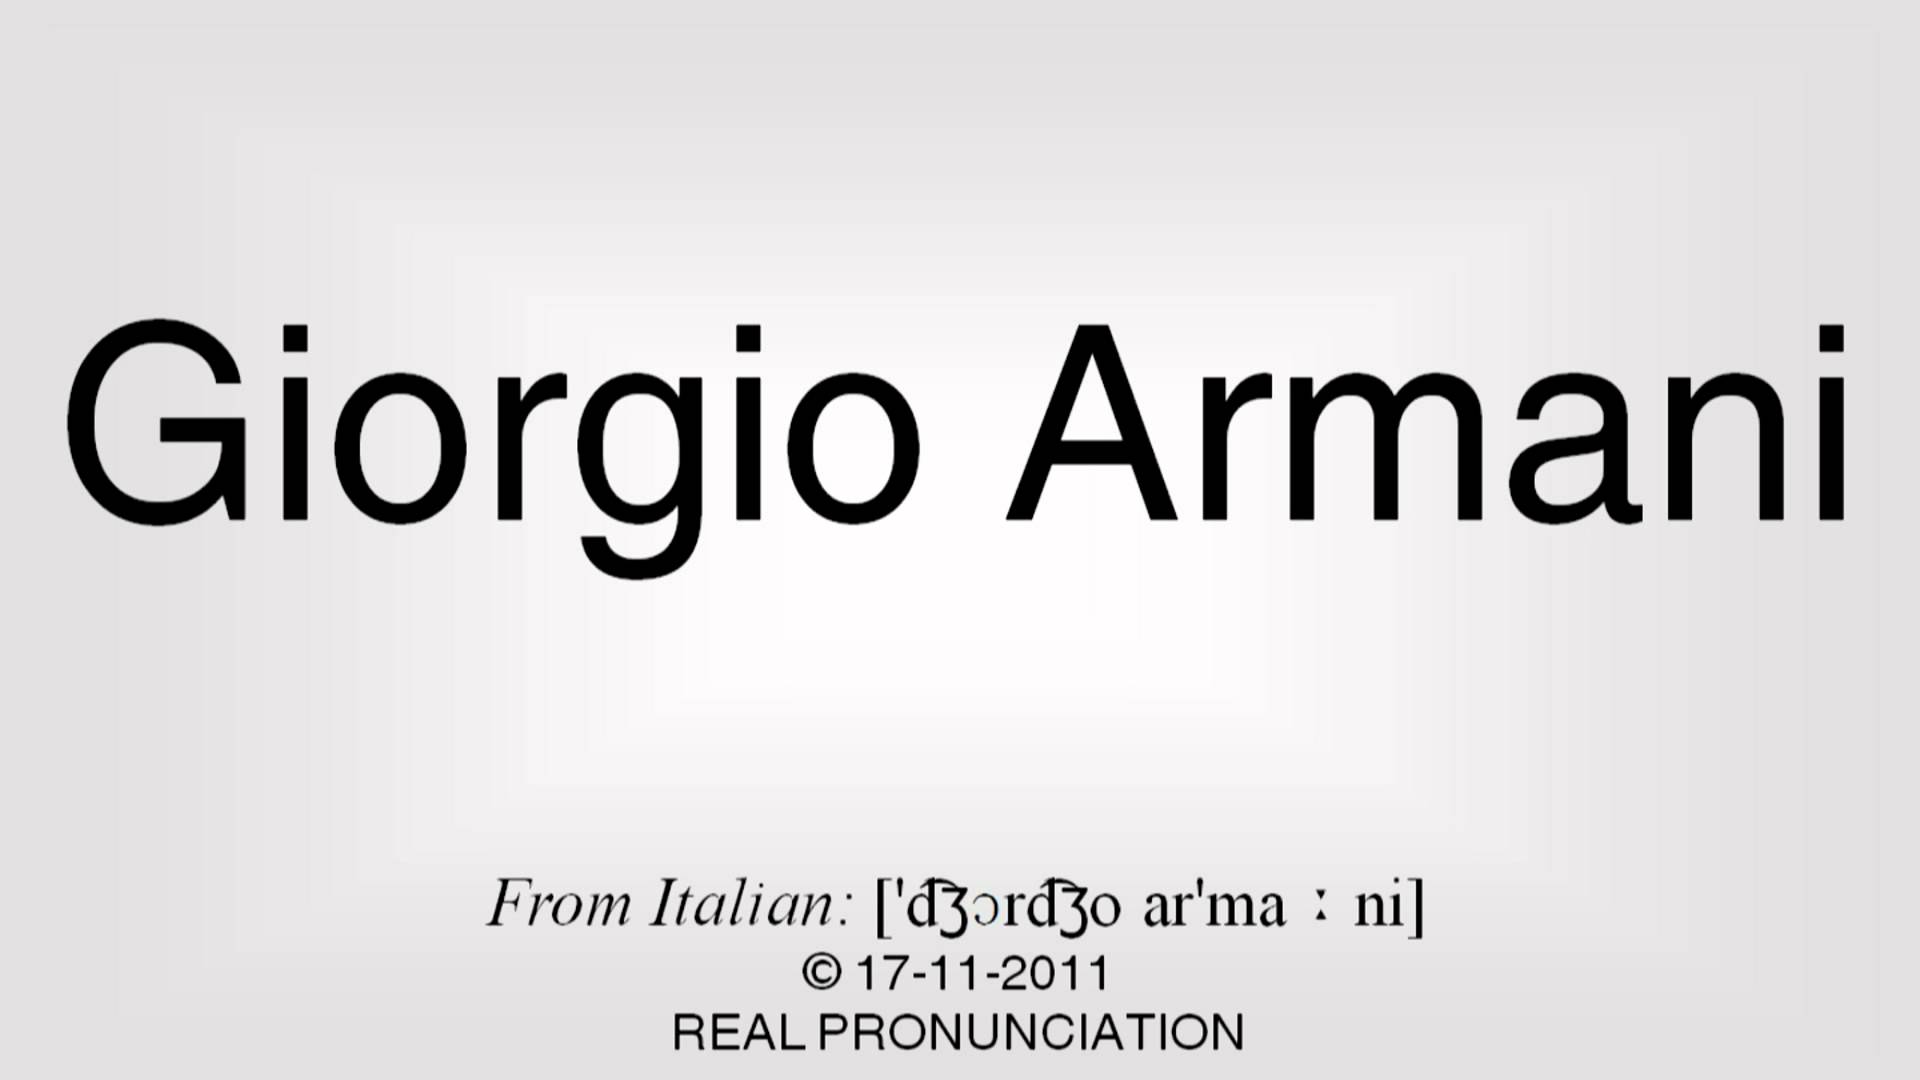 How to pronounce Giorgio Armani